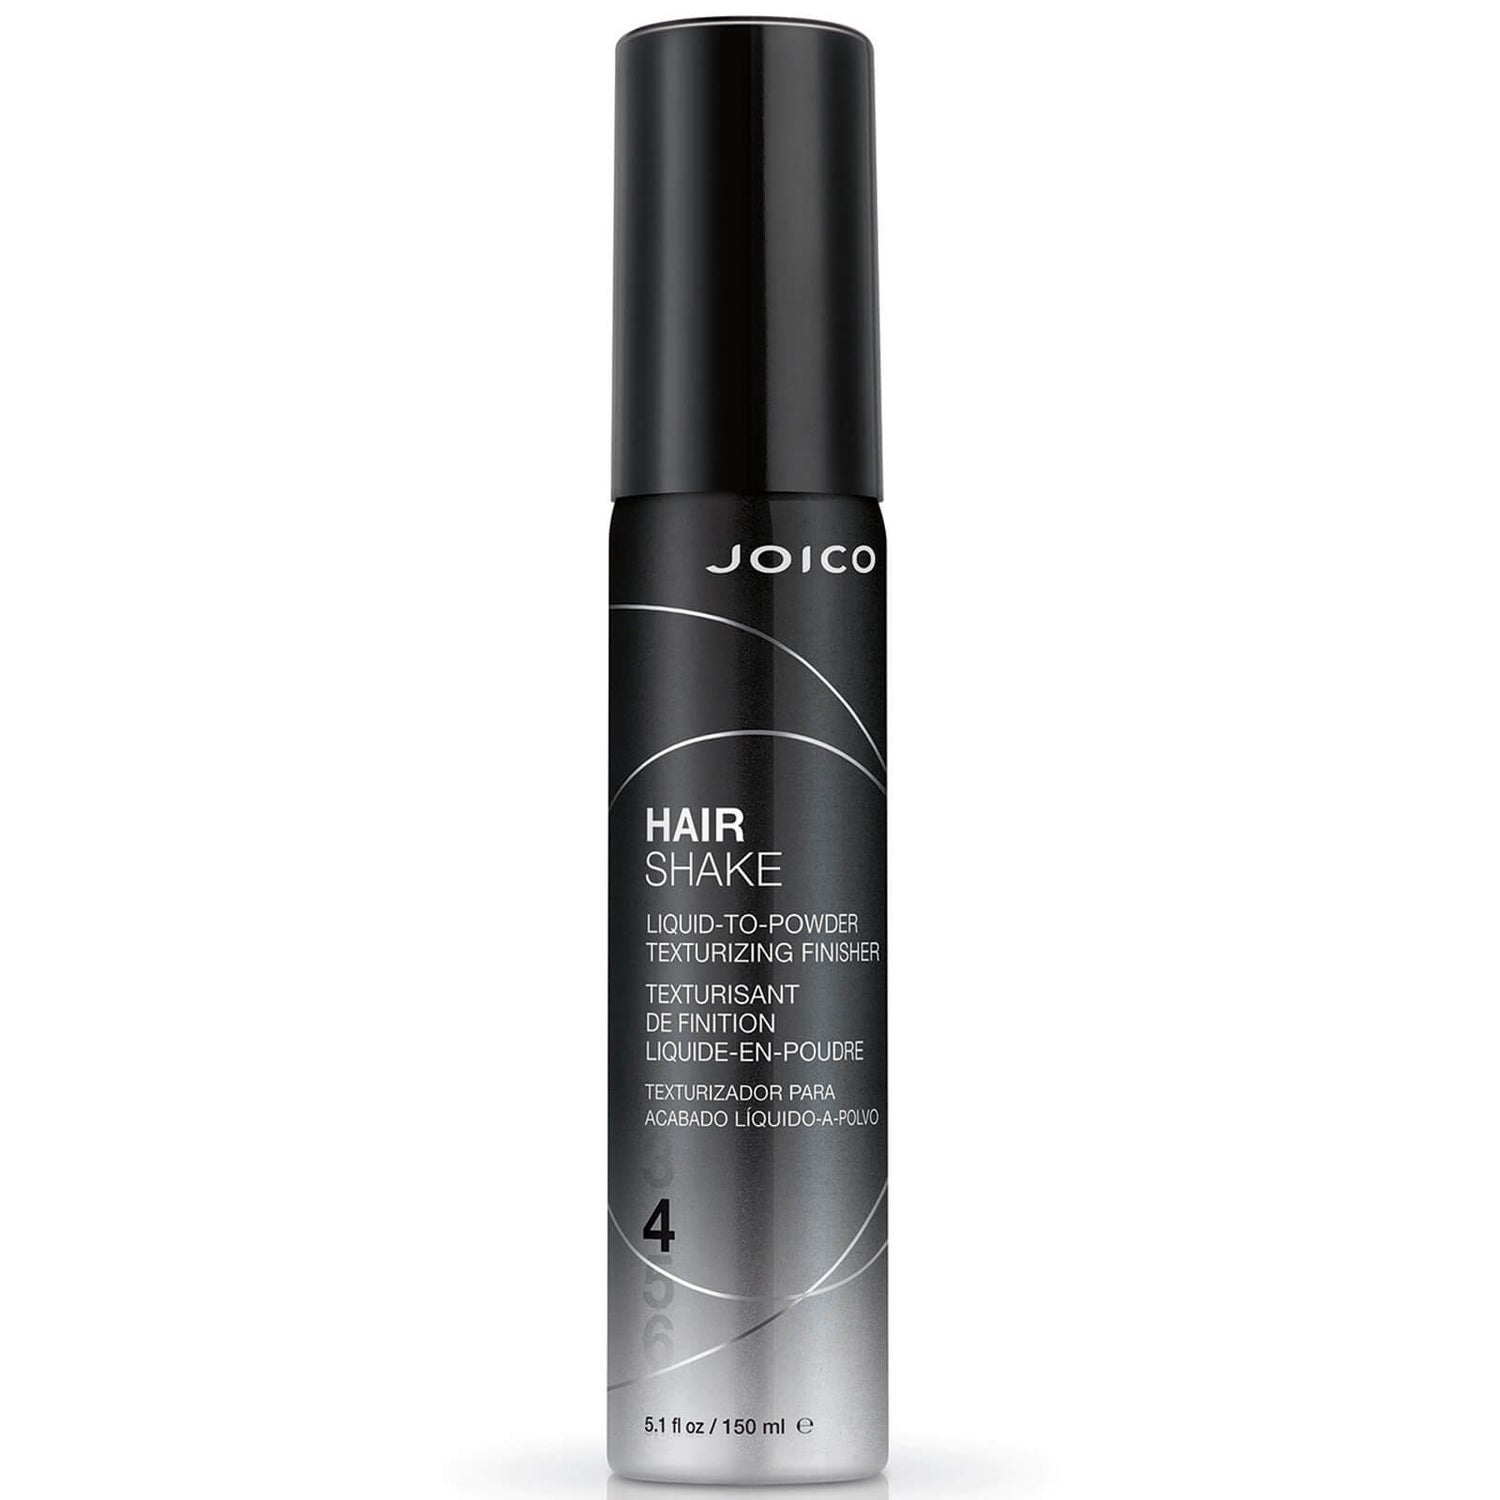 Joico Hair Shake Liquid-to-Powder Finishing Texturizer (150ml)